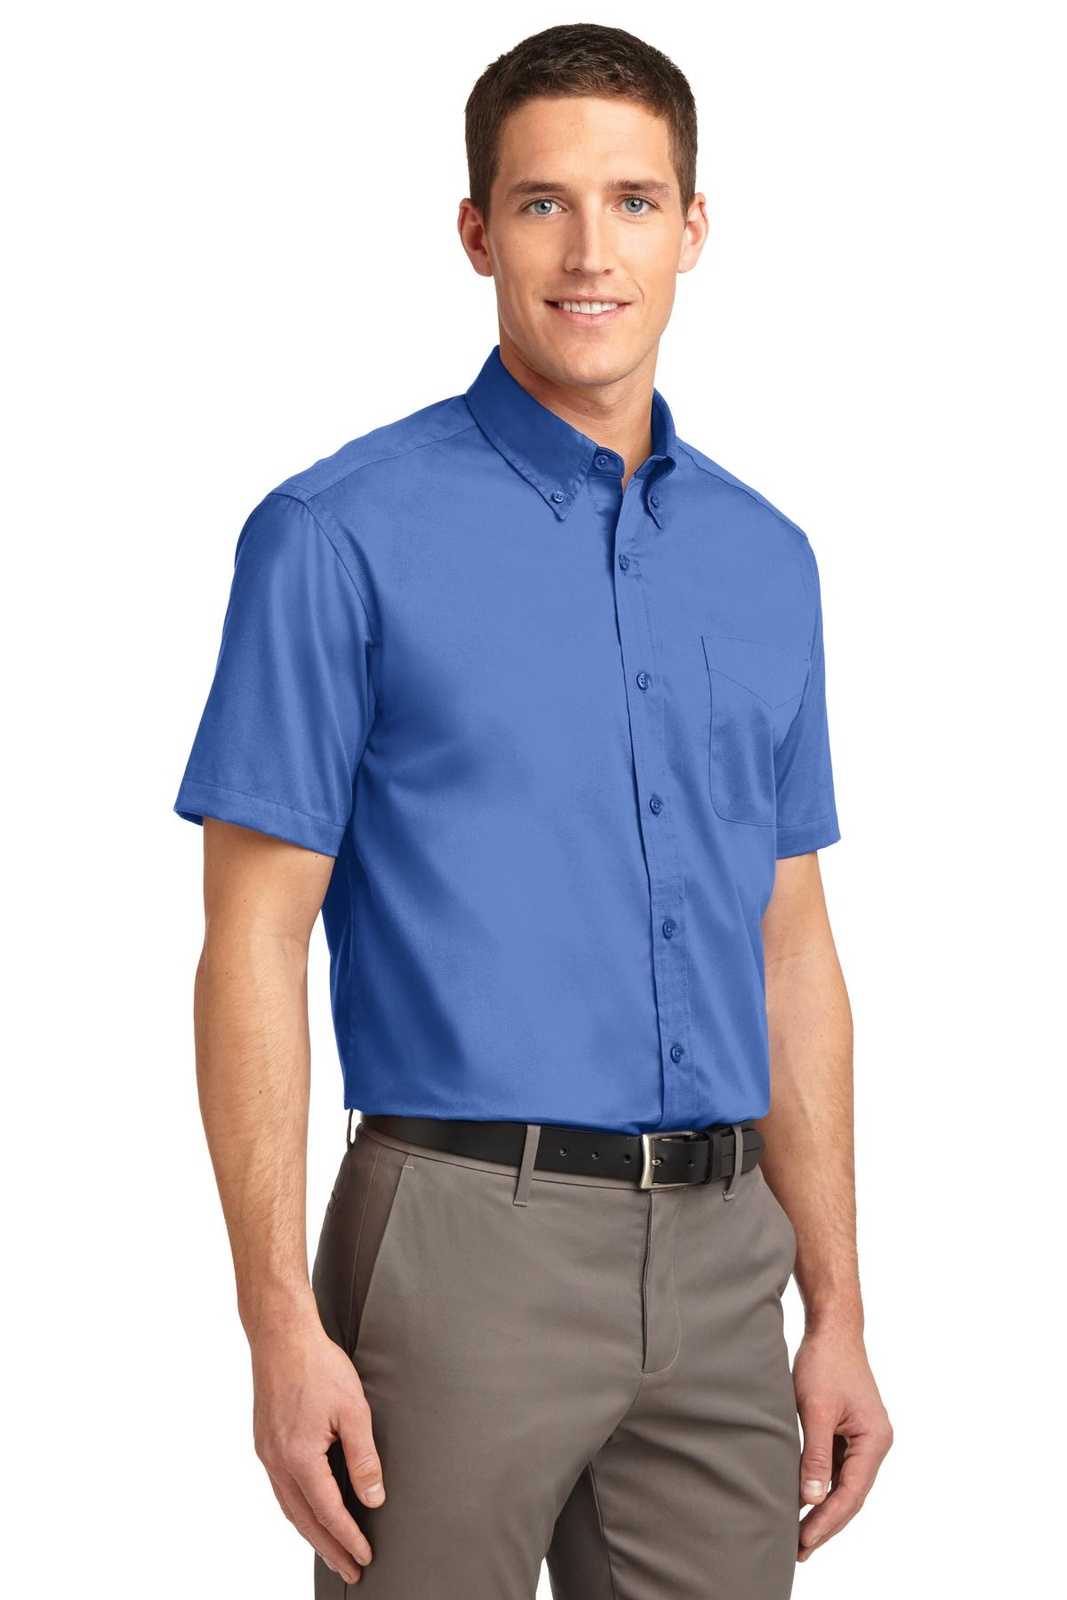 Port Authority TLS508 Tall Short Sleeve Easy Care Shirt - Ultramarine Blue - HIT a Double - 4